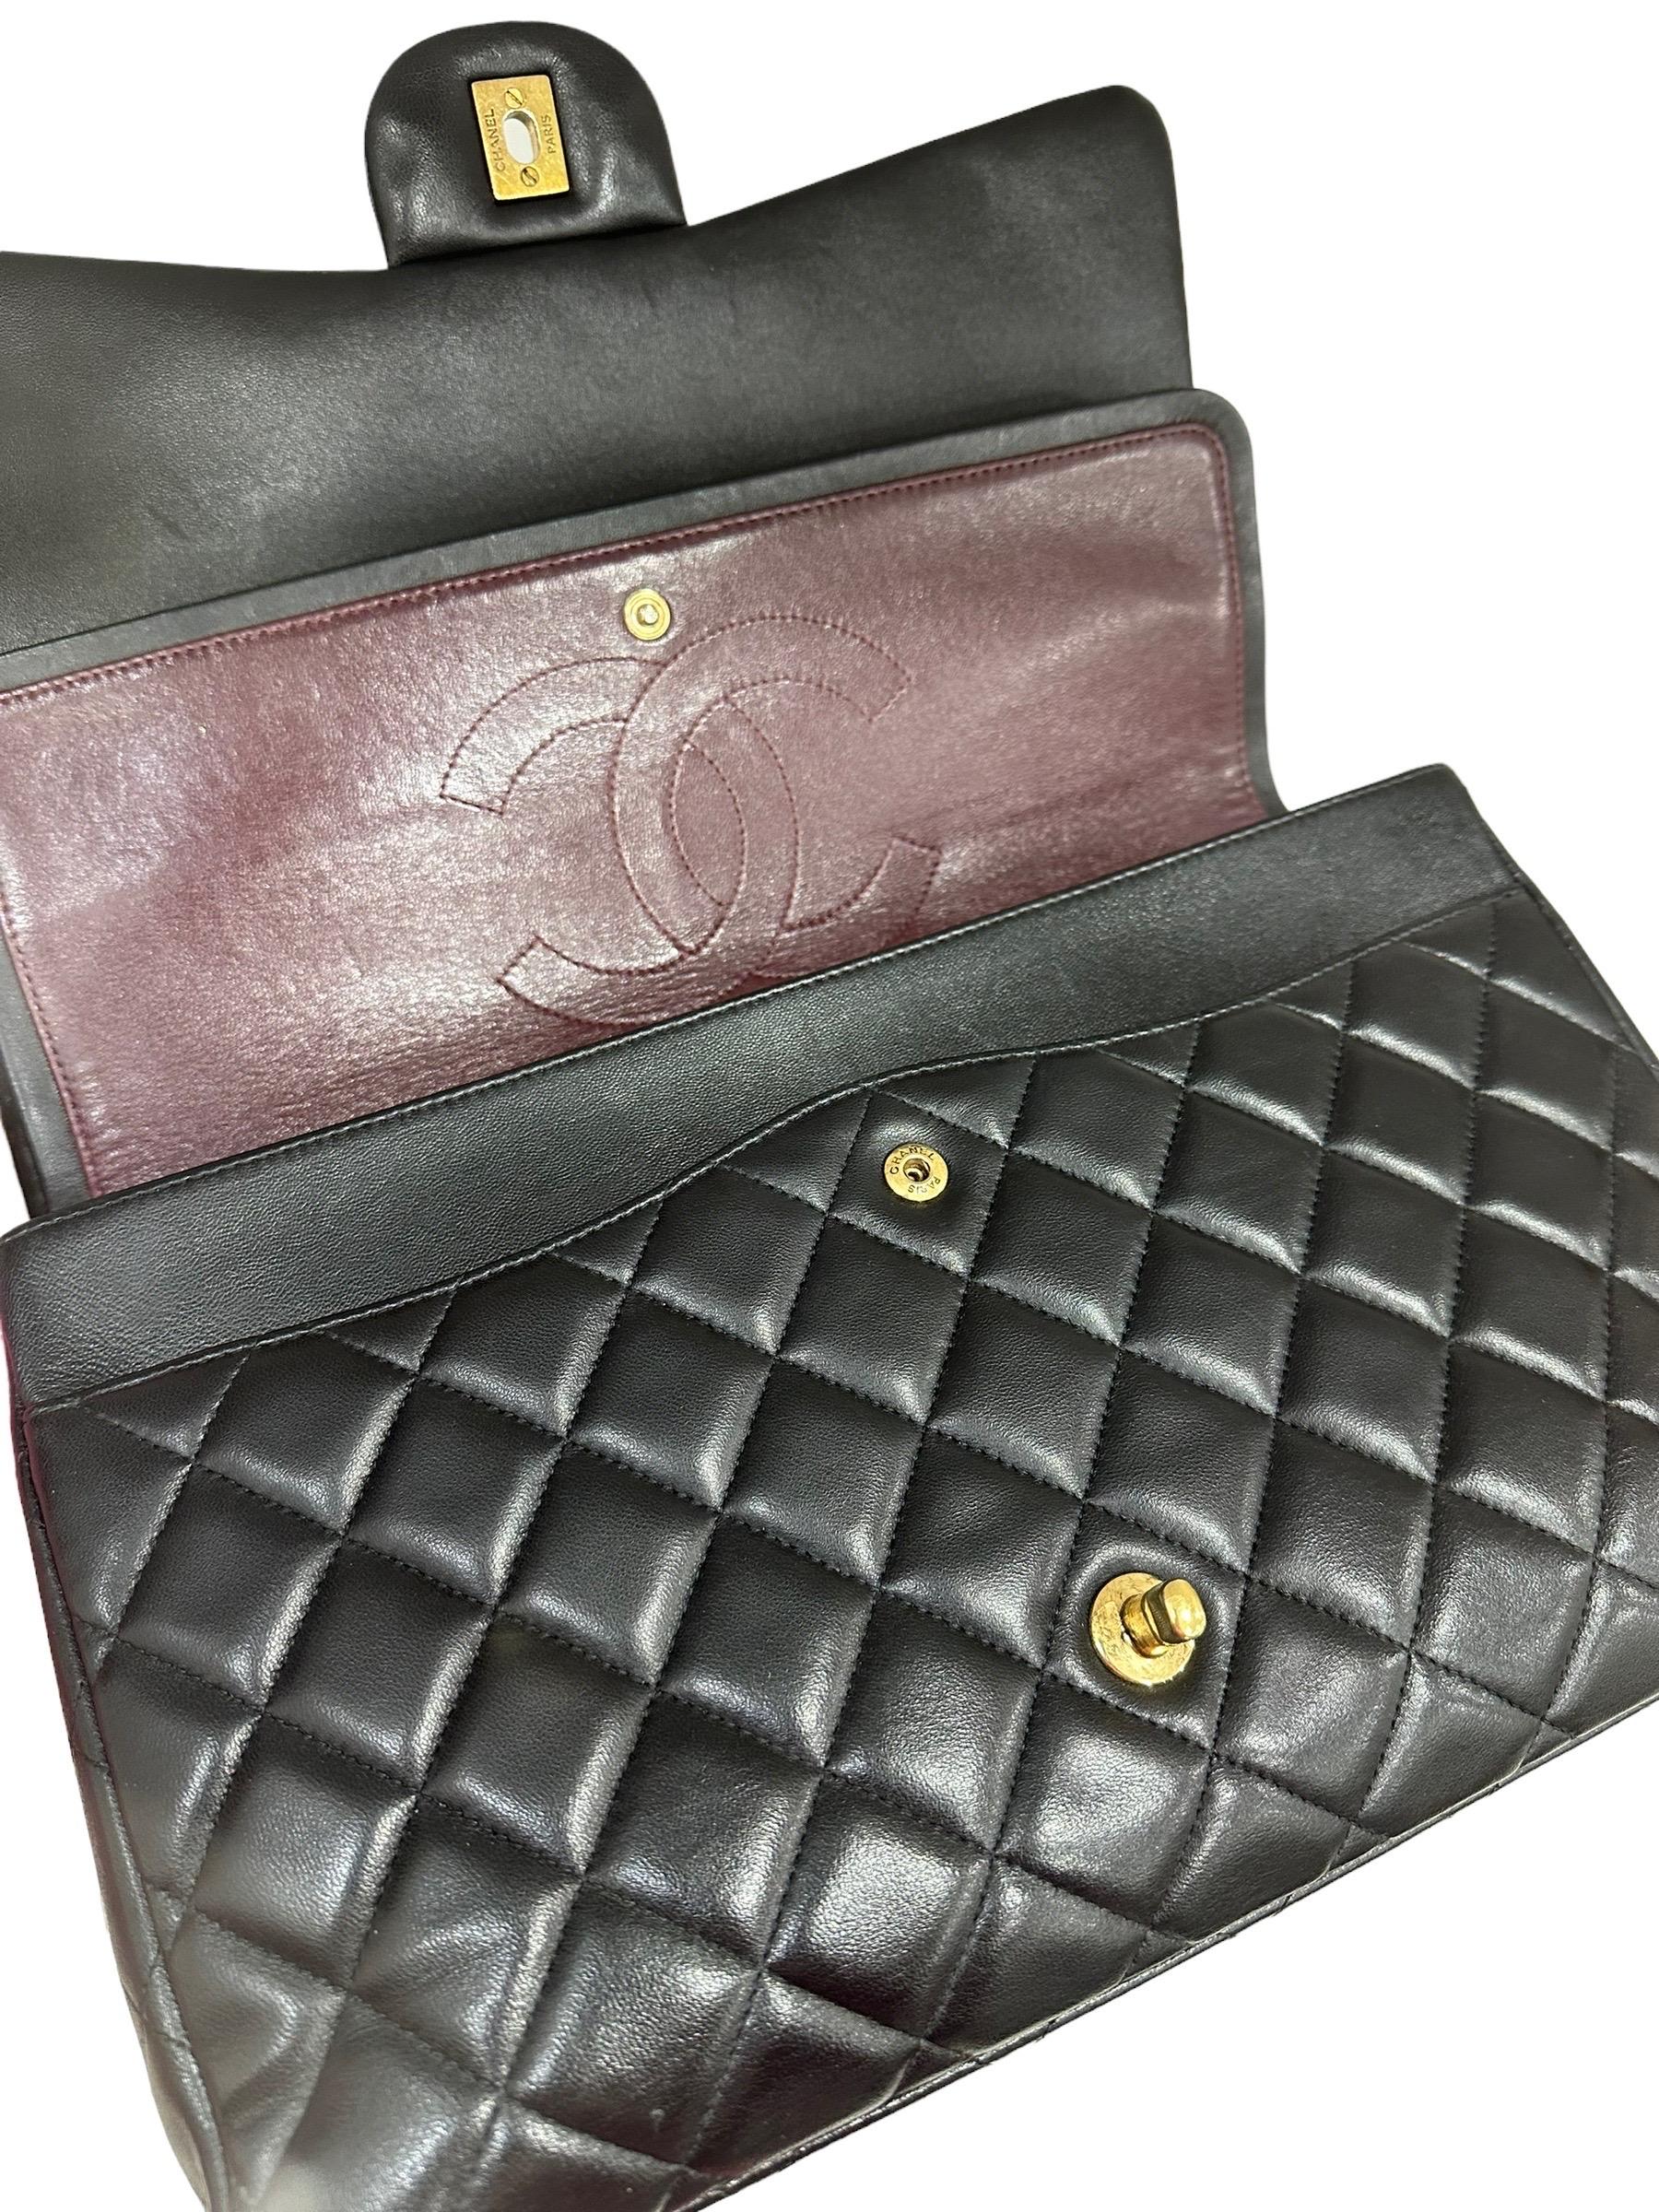 2011 Chanel Timeless Maxi Jumbo Black Leather Top Shoulder Bag 9